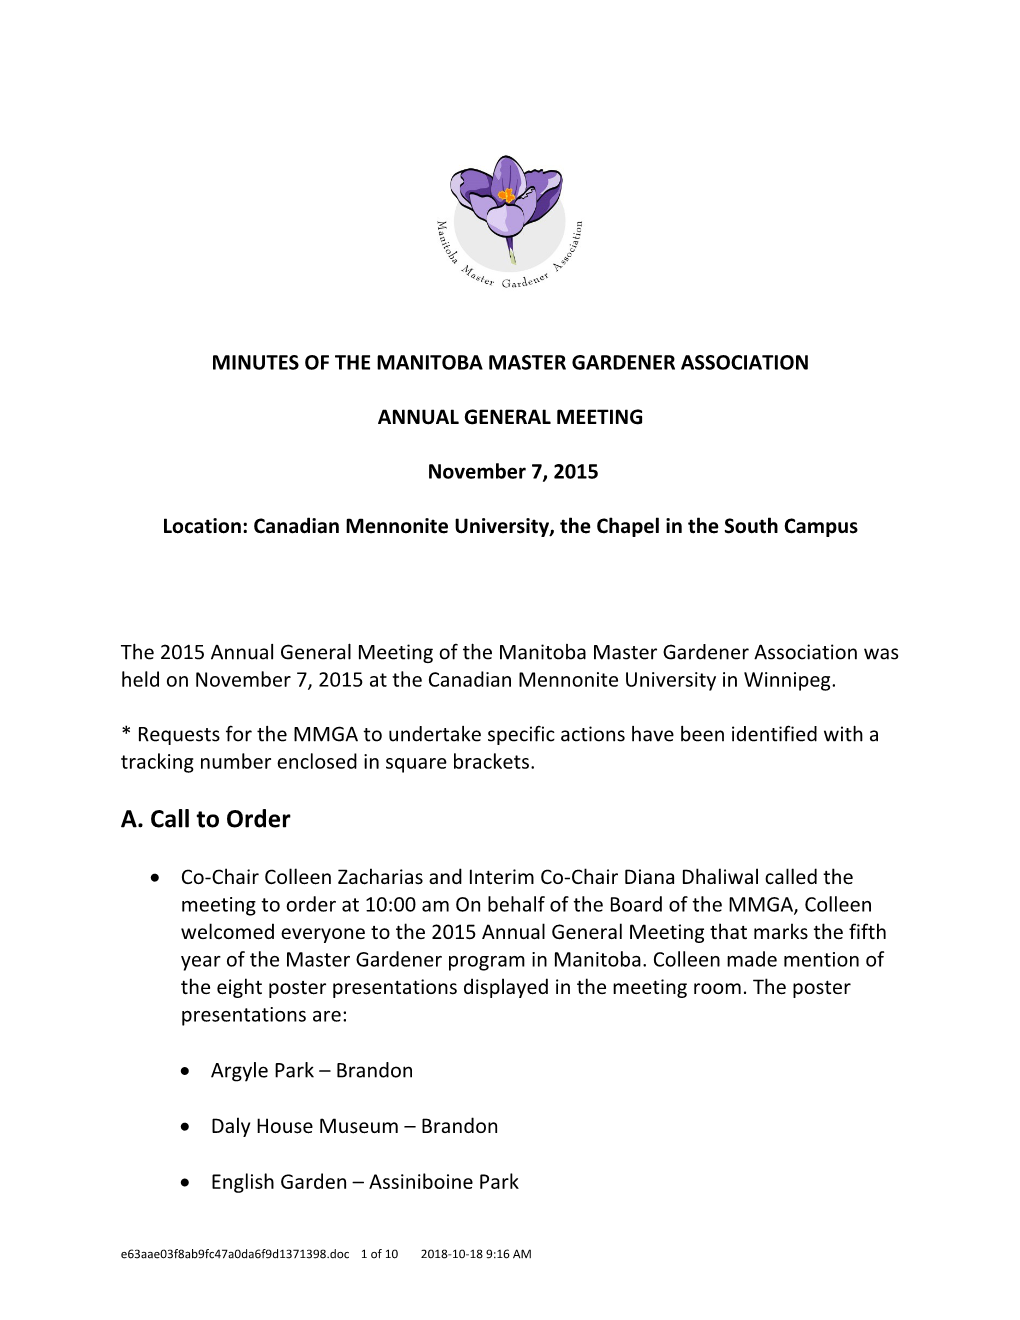 Minutes of the Manitoba Master Gardener Association